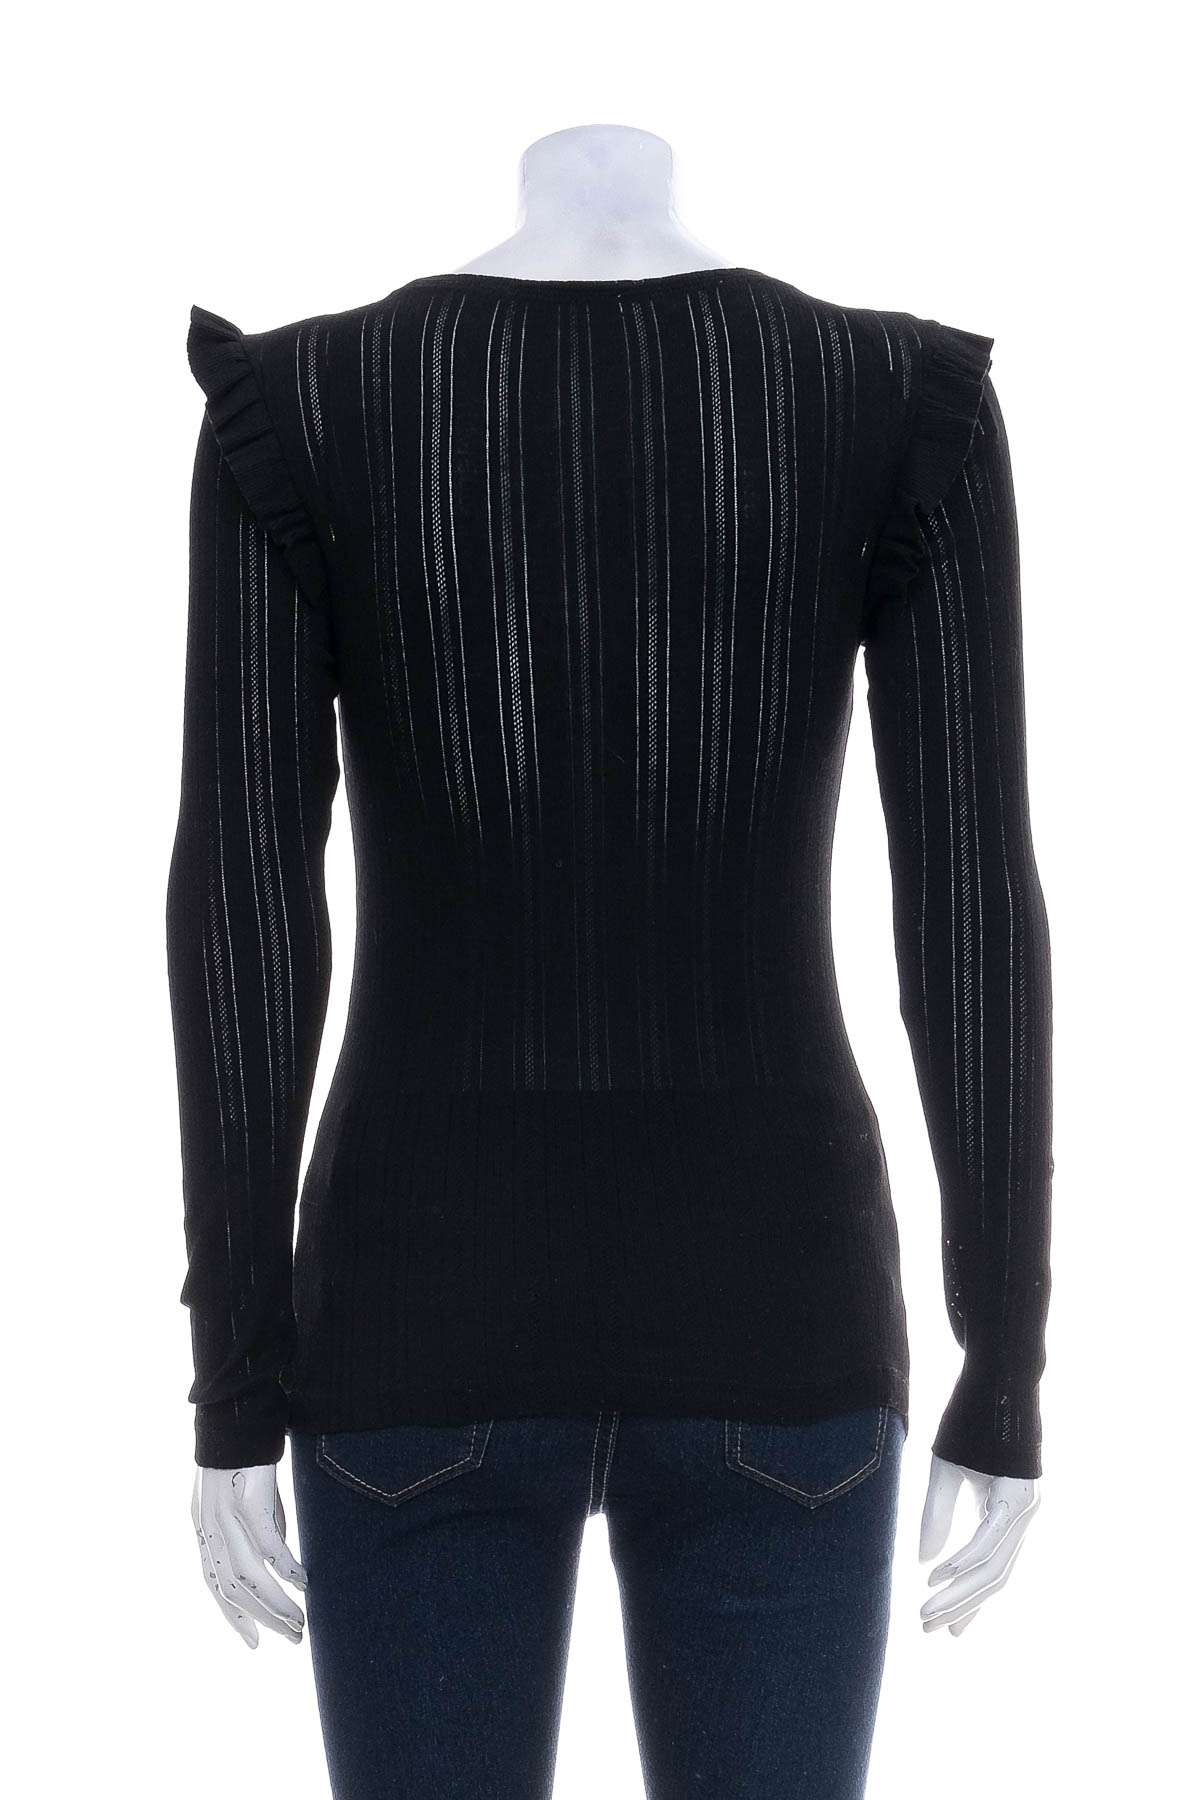 Women's sweater - TOM TAILOR Denim - 1